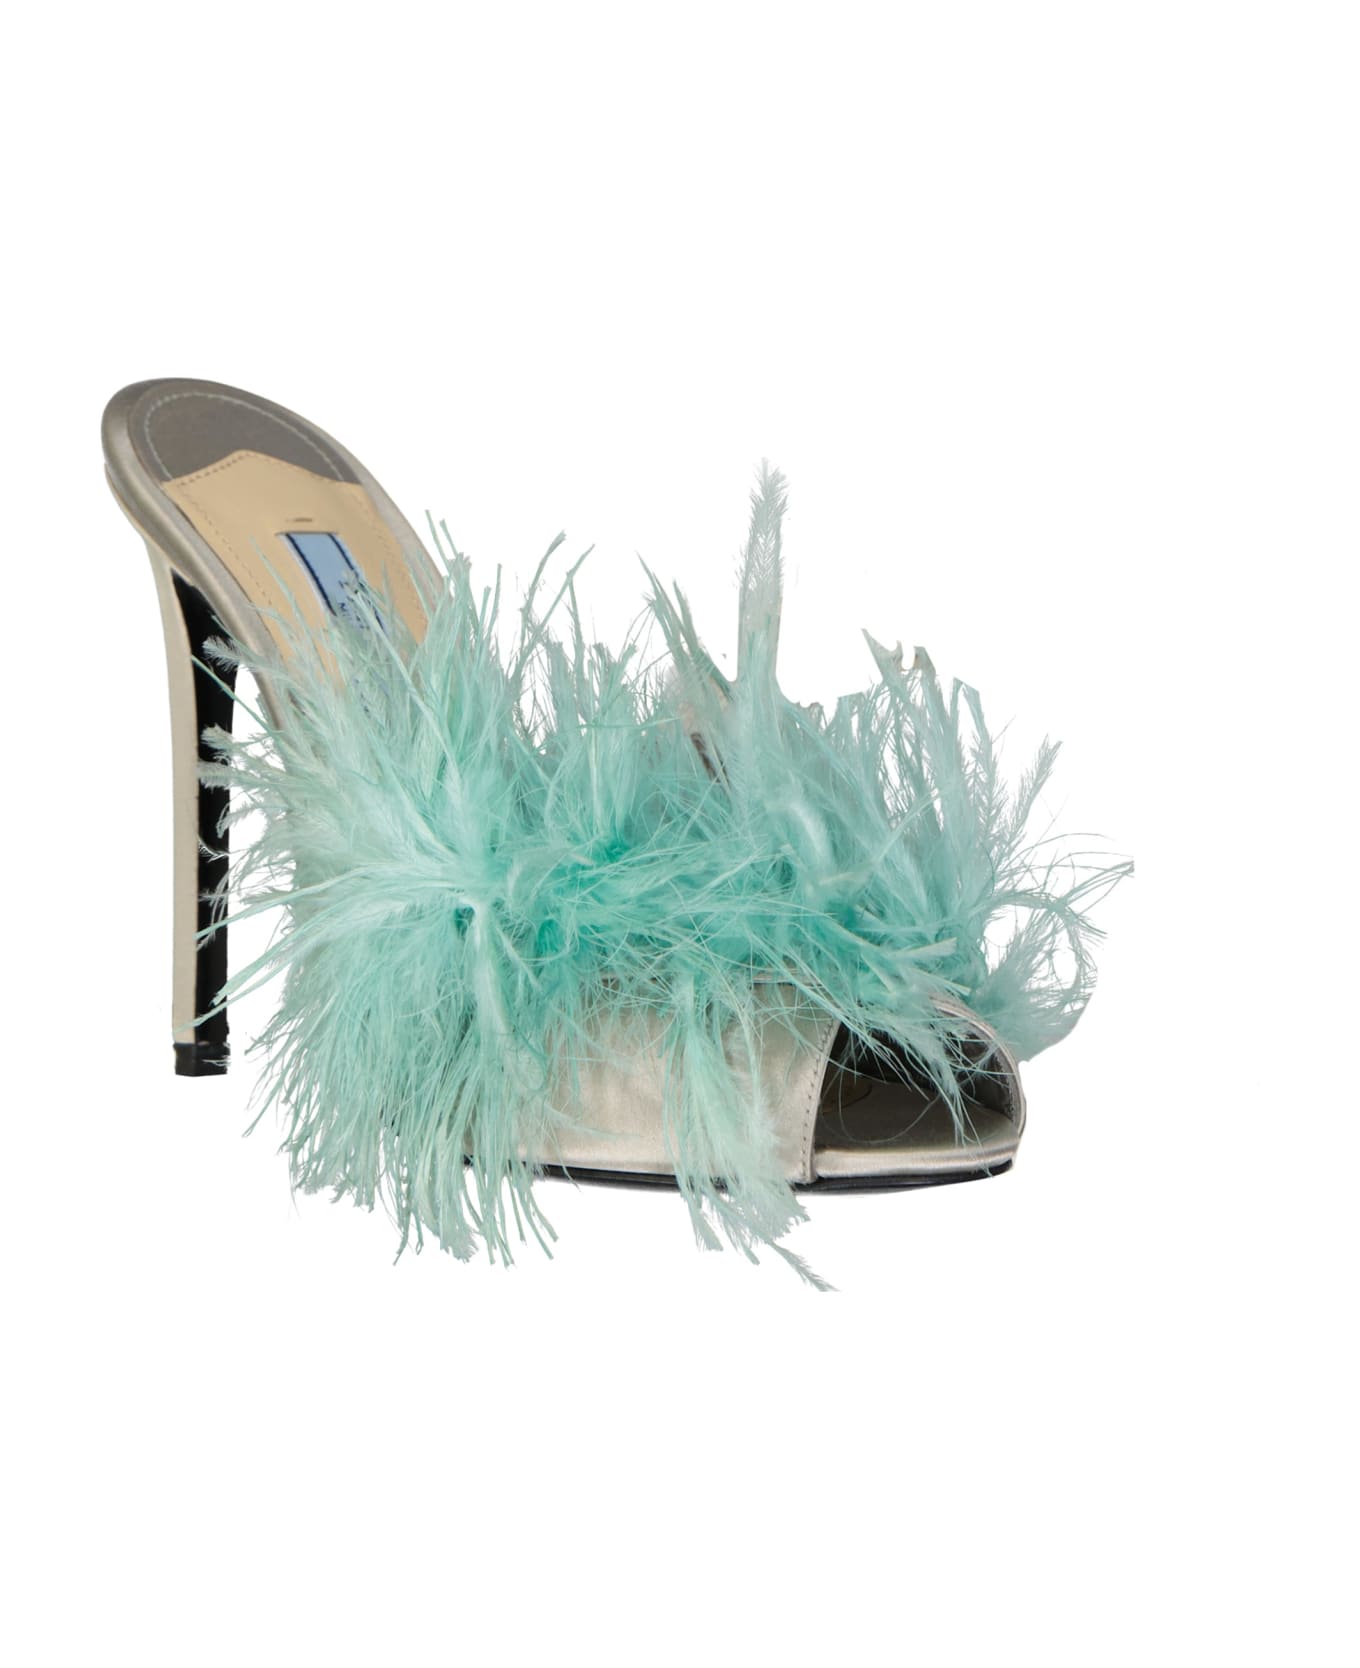 Prada Silk End Feathers Sandals - Beige